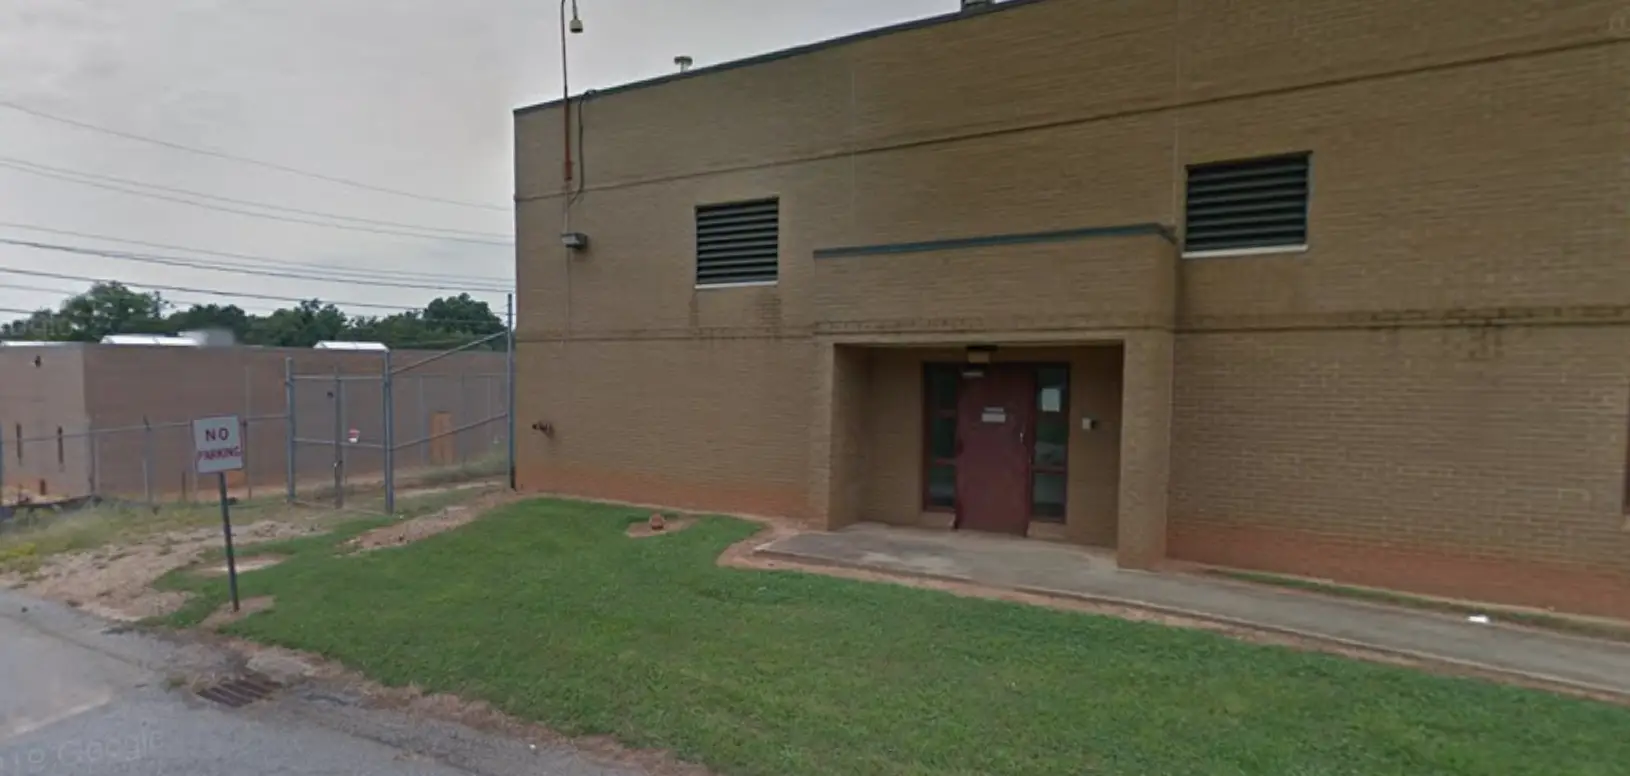 Greenwood County Detention Center, Greenwood, South Carolina